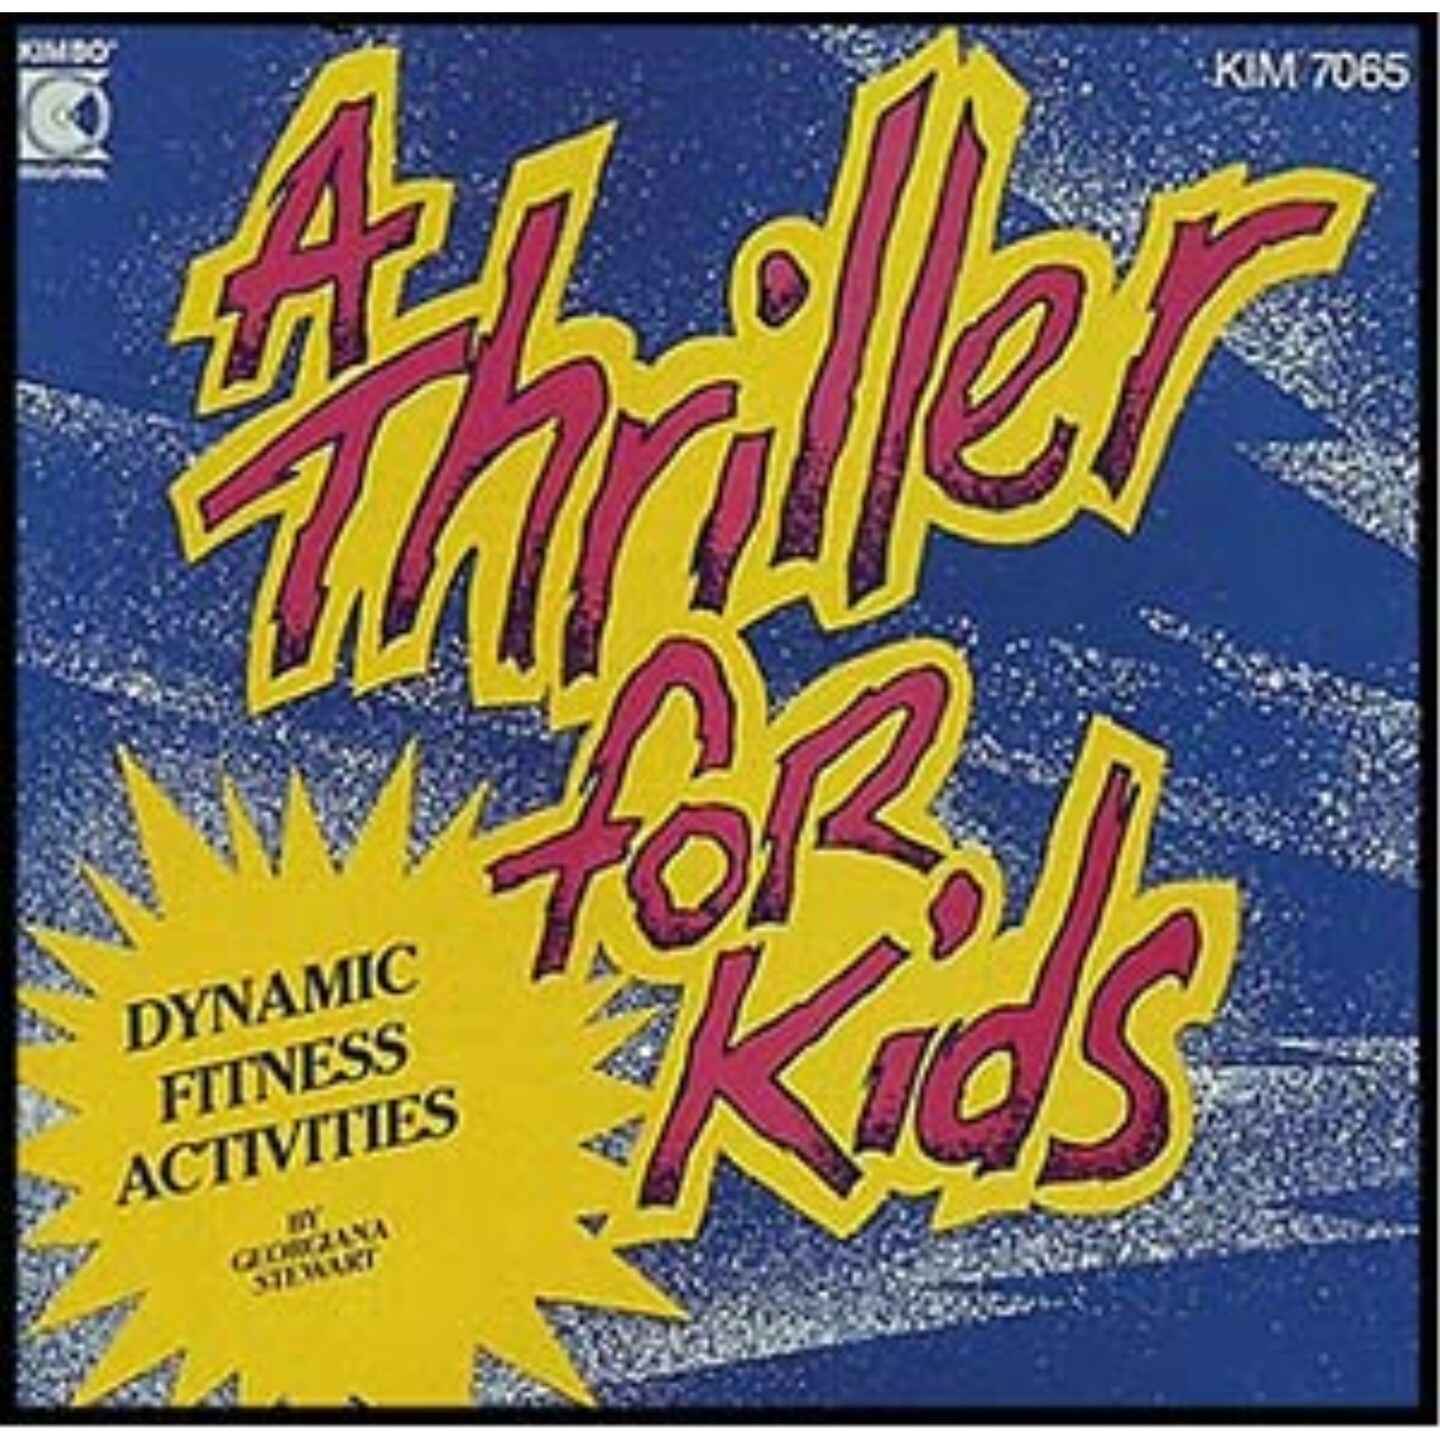 A Thriller for Kids Educational CD